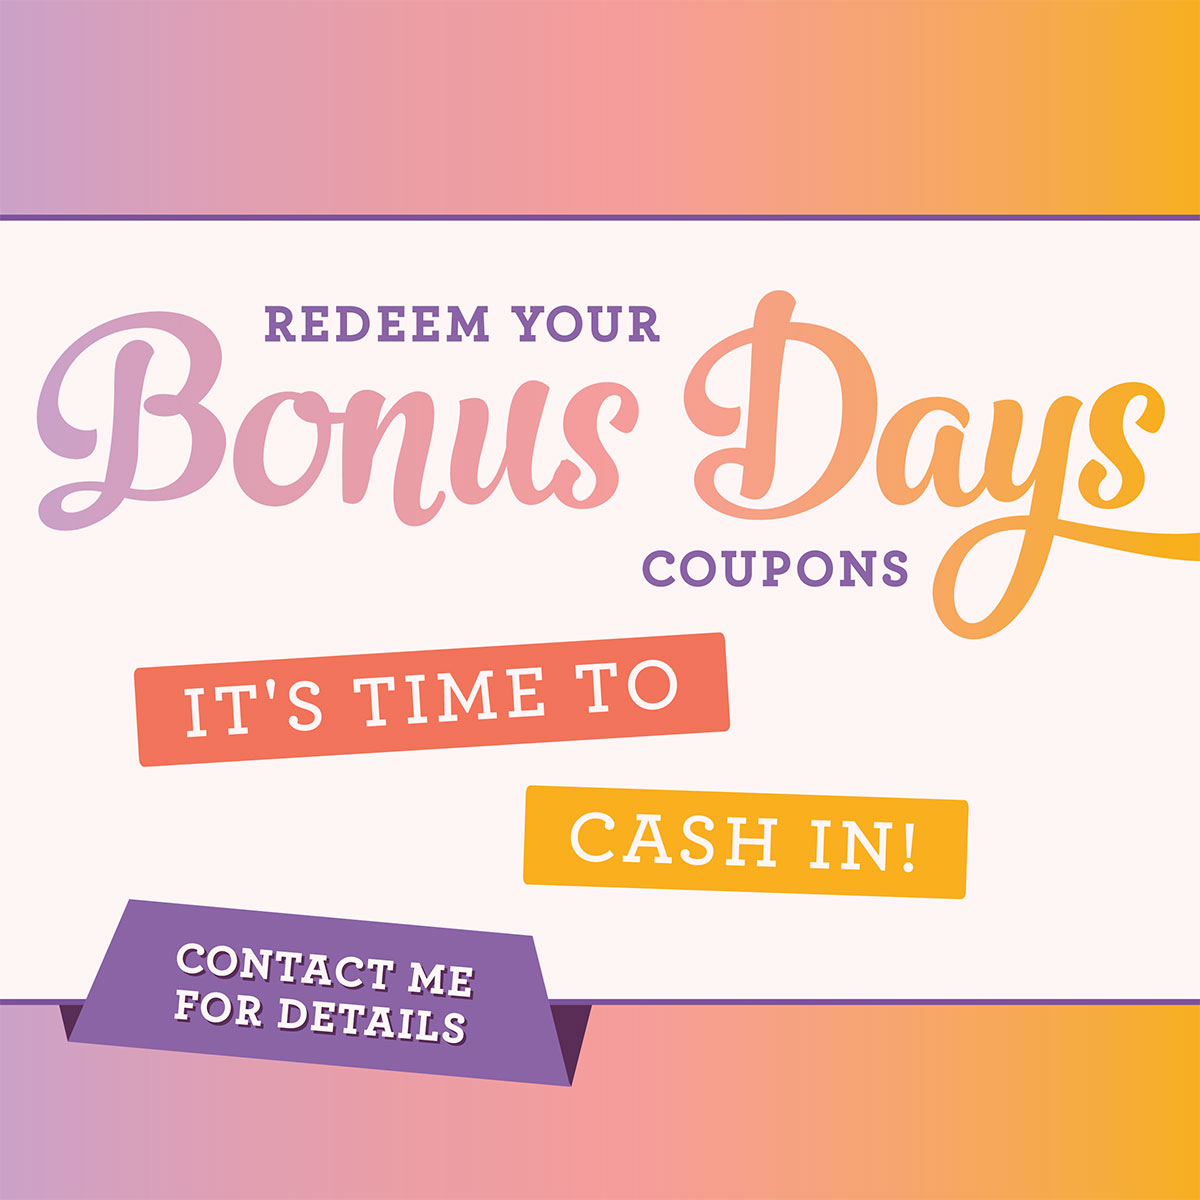 Bonus Days Time to Redeem your coupons